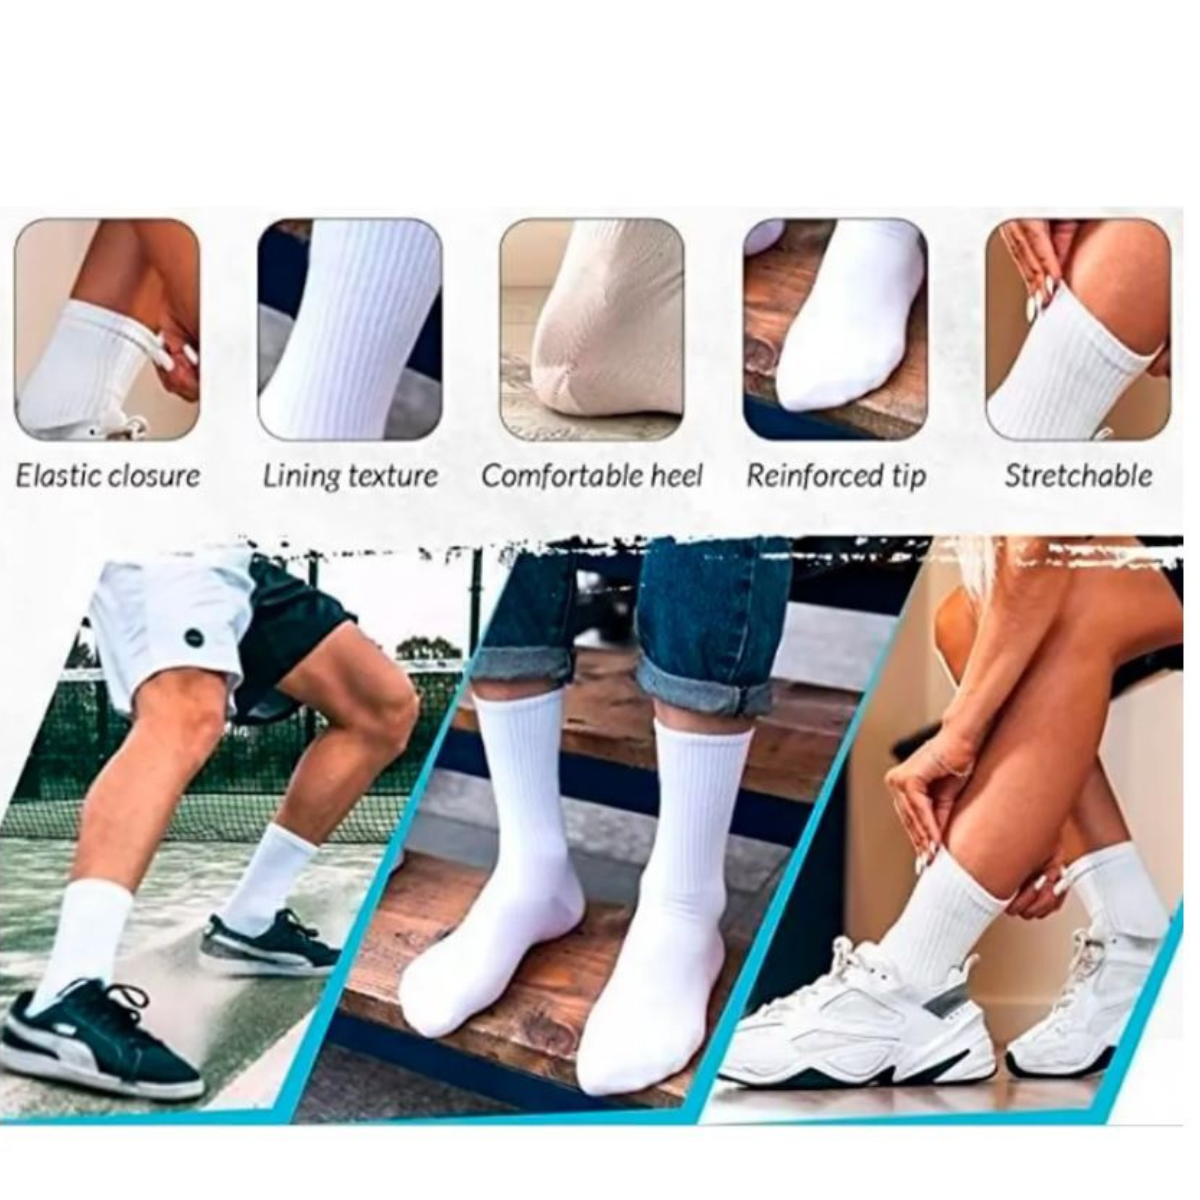 Calcetas largas deportivas algodon(1 par) – racotex